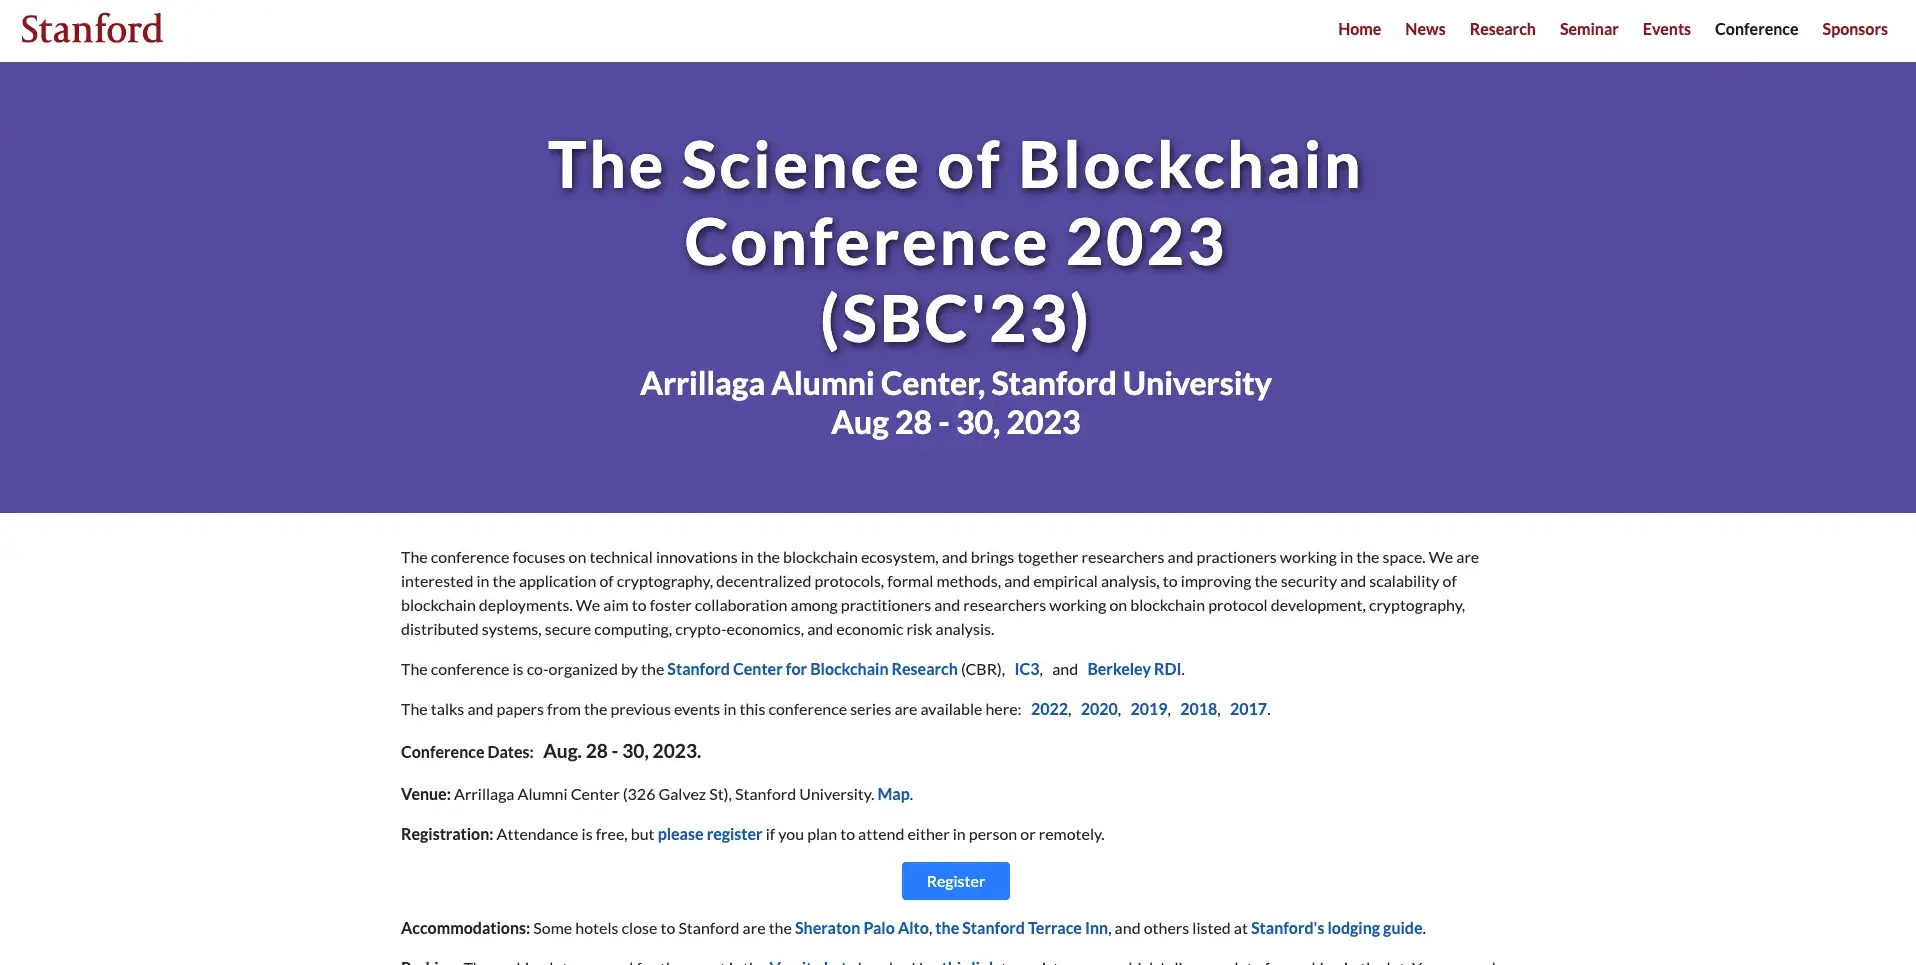 5. Konferencja Science of Blockchain